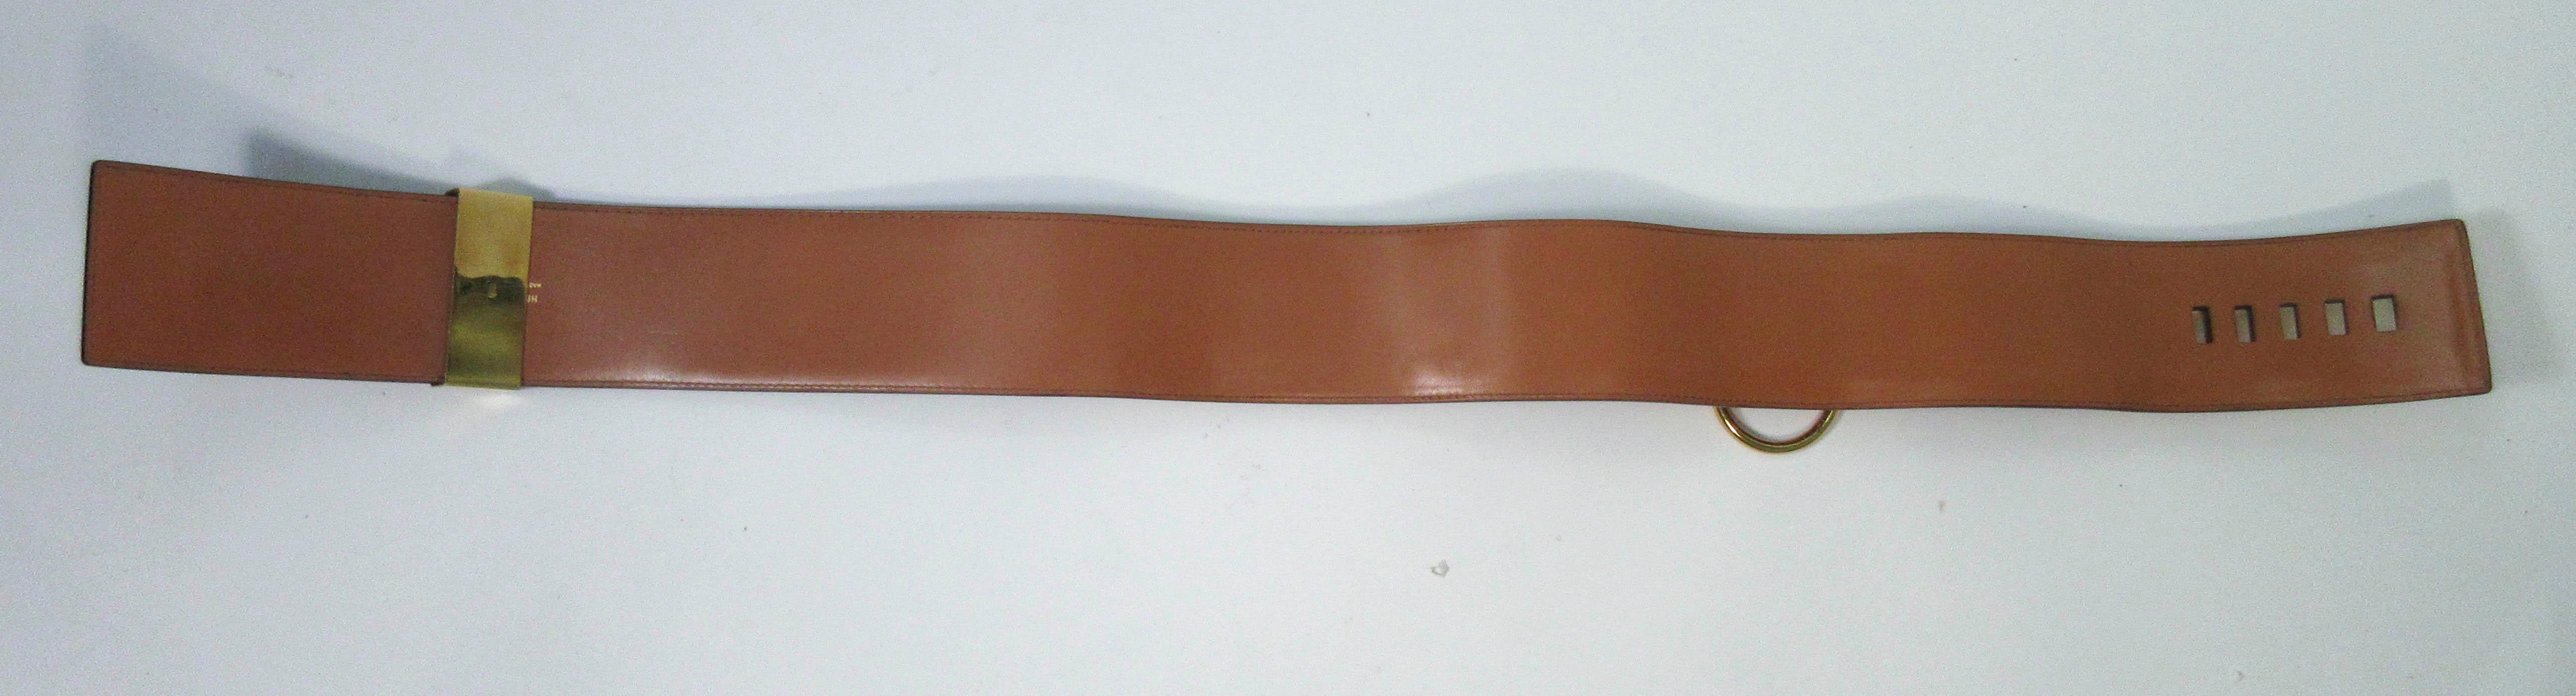 Women's HERMES Collier De Chien Vintage Brown Leather Belt with Gold Hardware Size Large